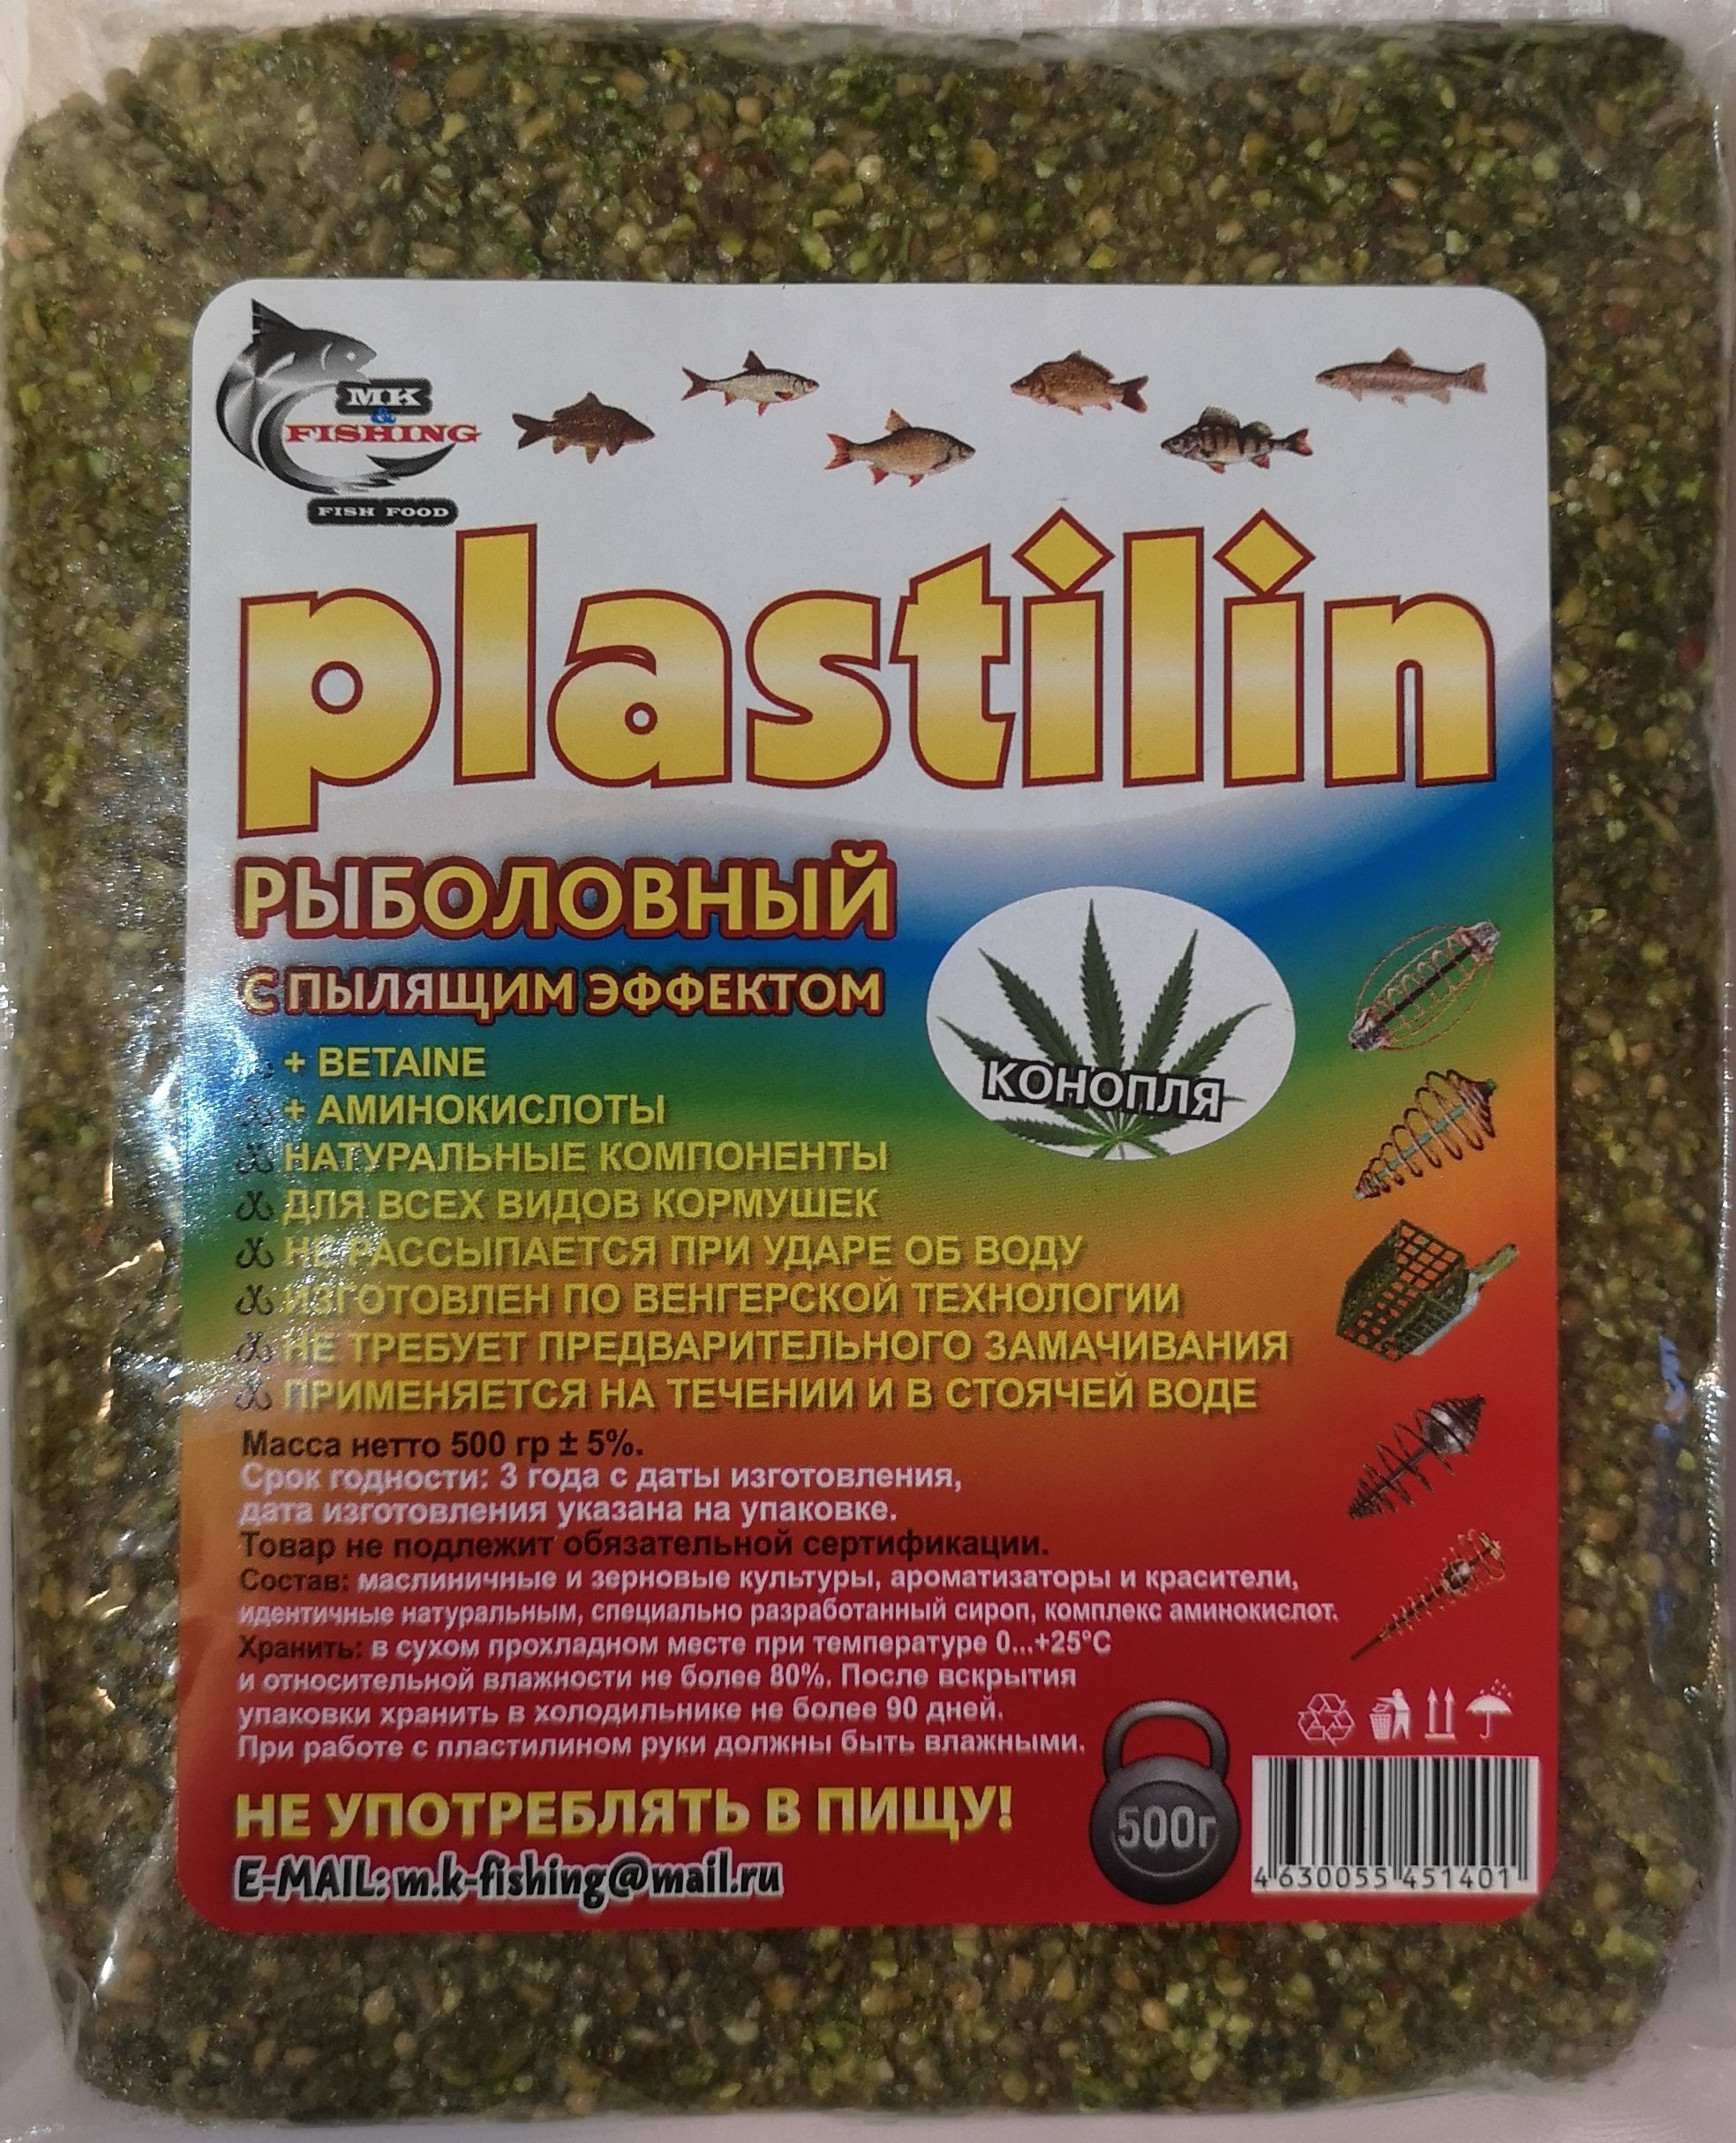 Пластилин для рыбалки